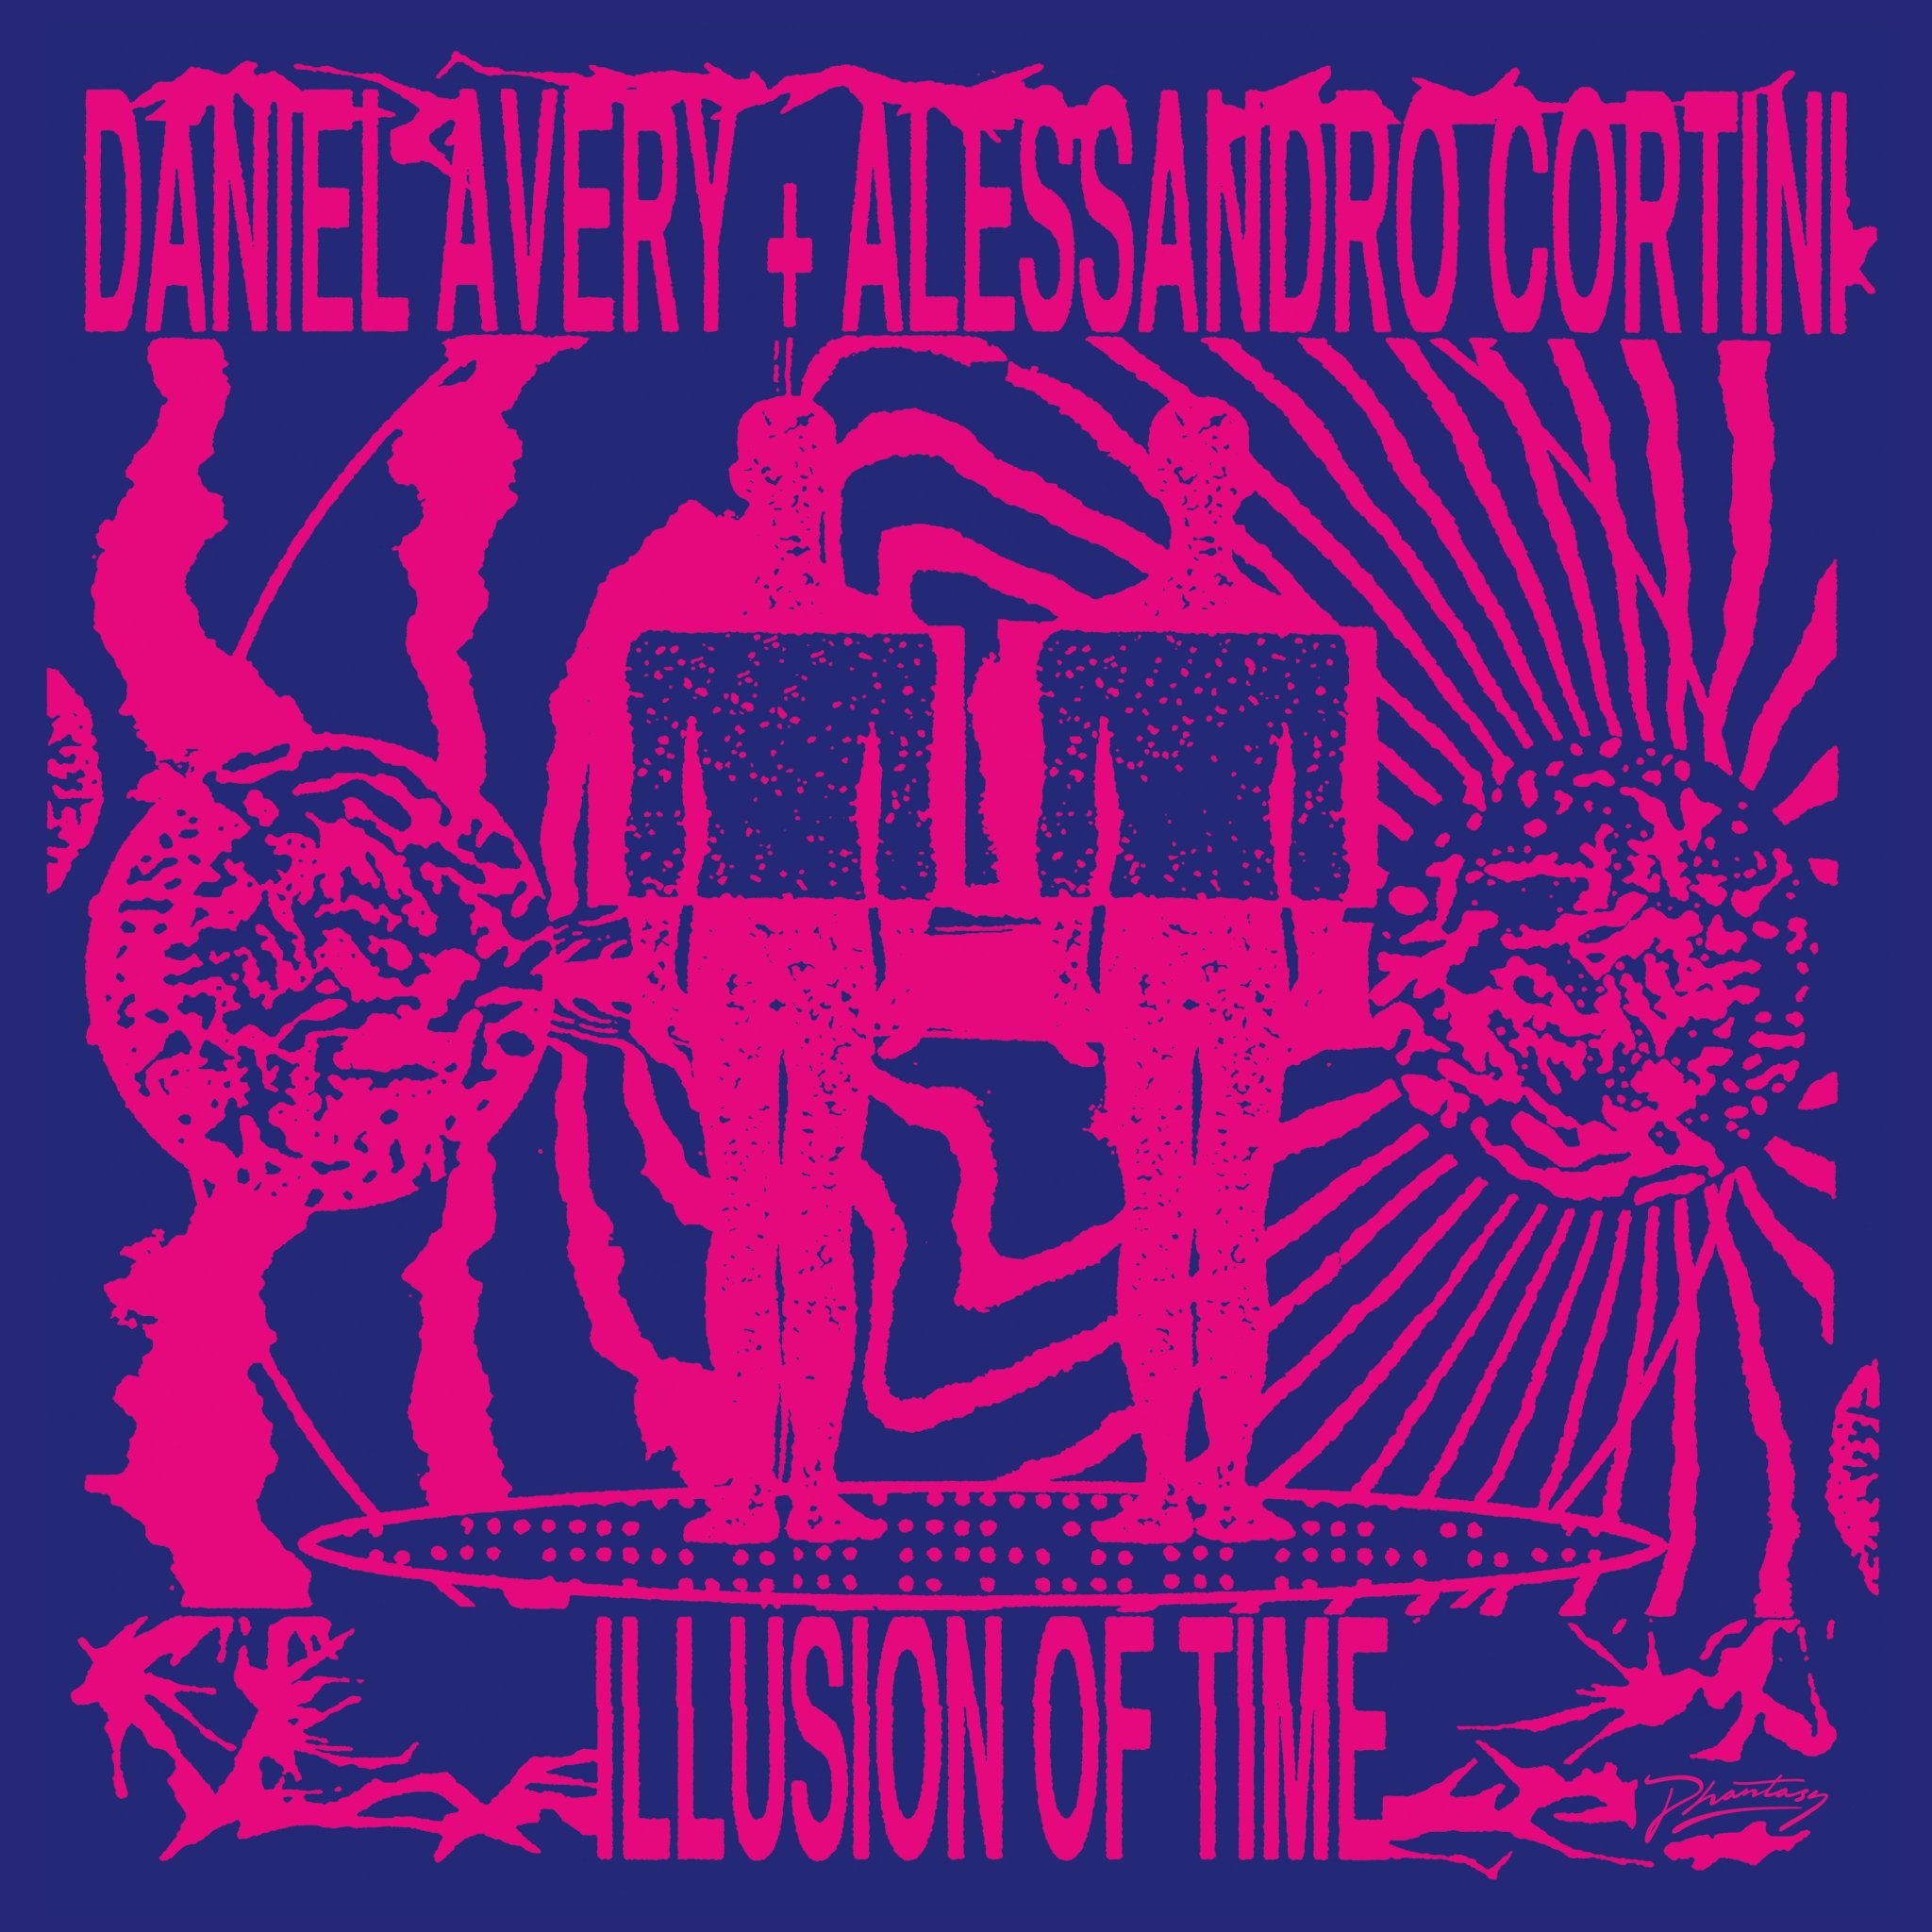 Phantasy Sound Daniel Avery & Alessandro Cortini - Illusion Of Time (Coloured Vinyl)